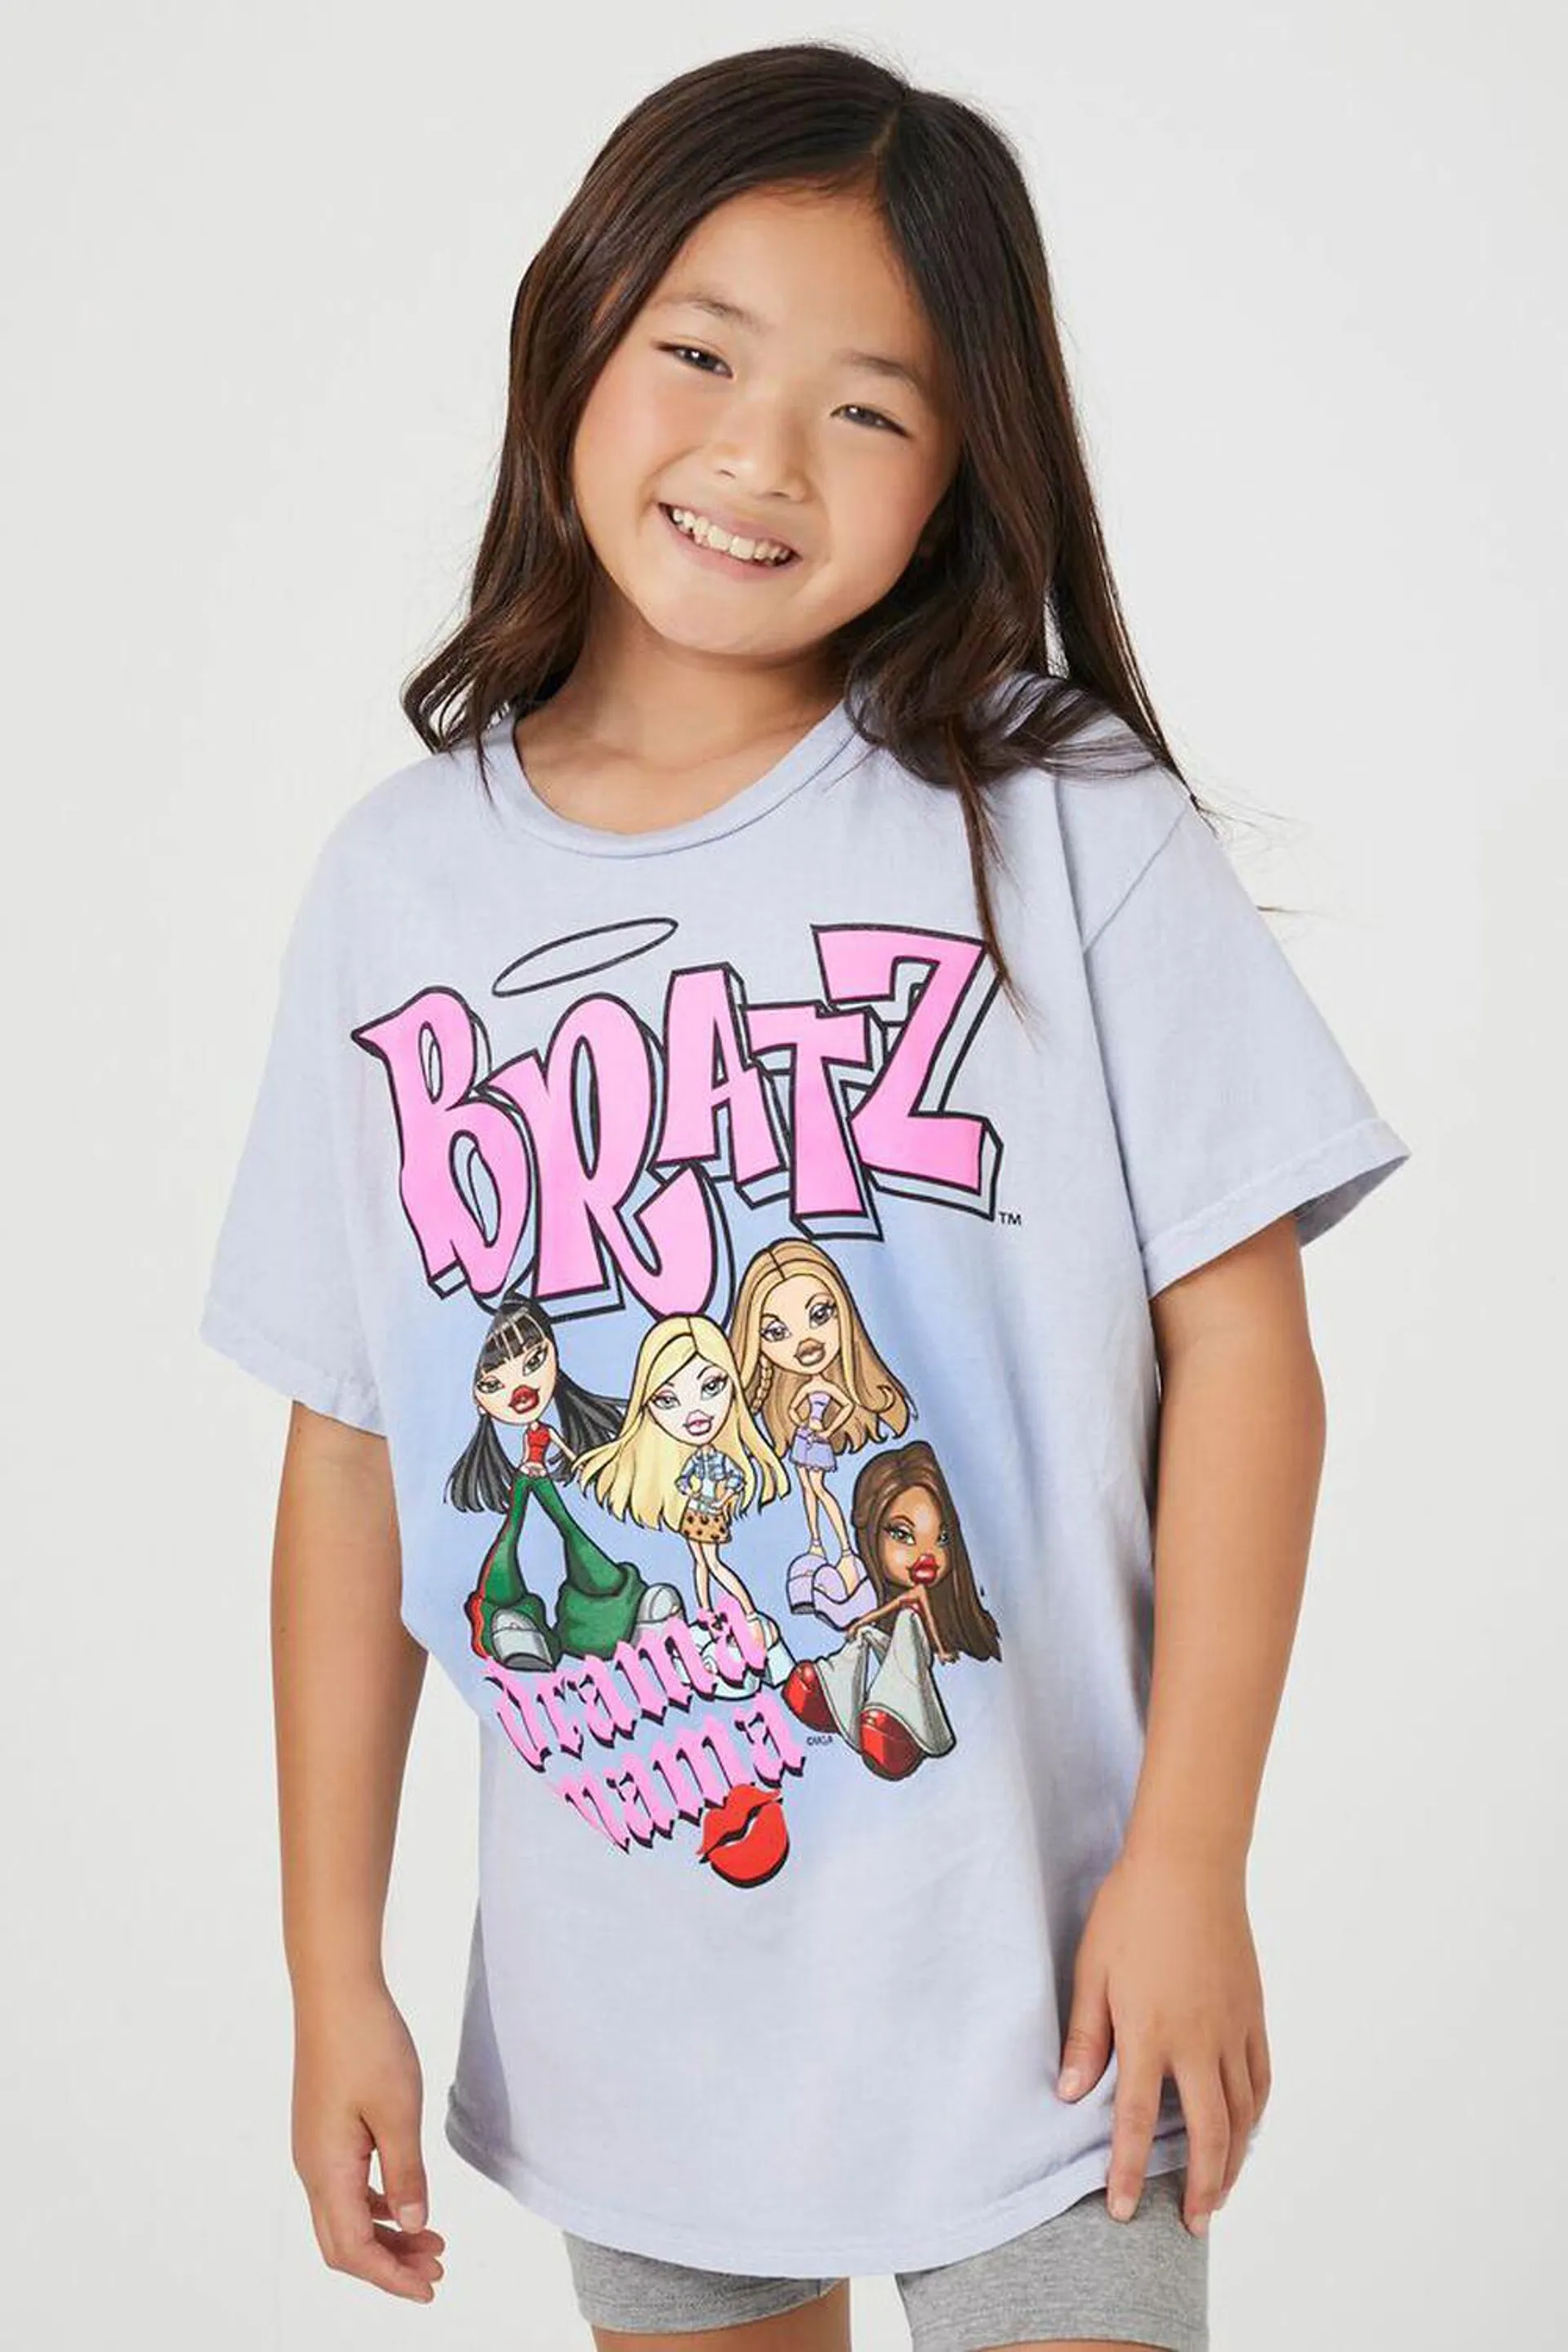 Girls Oversized Bratz Tee (Kids)